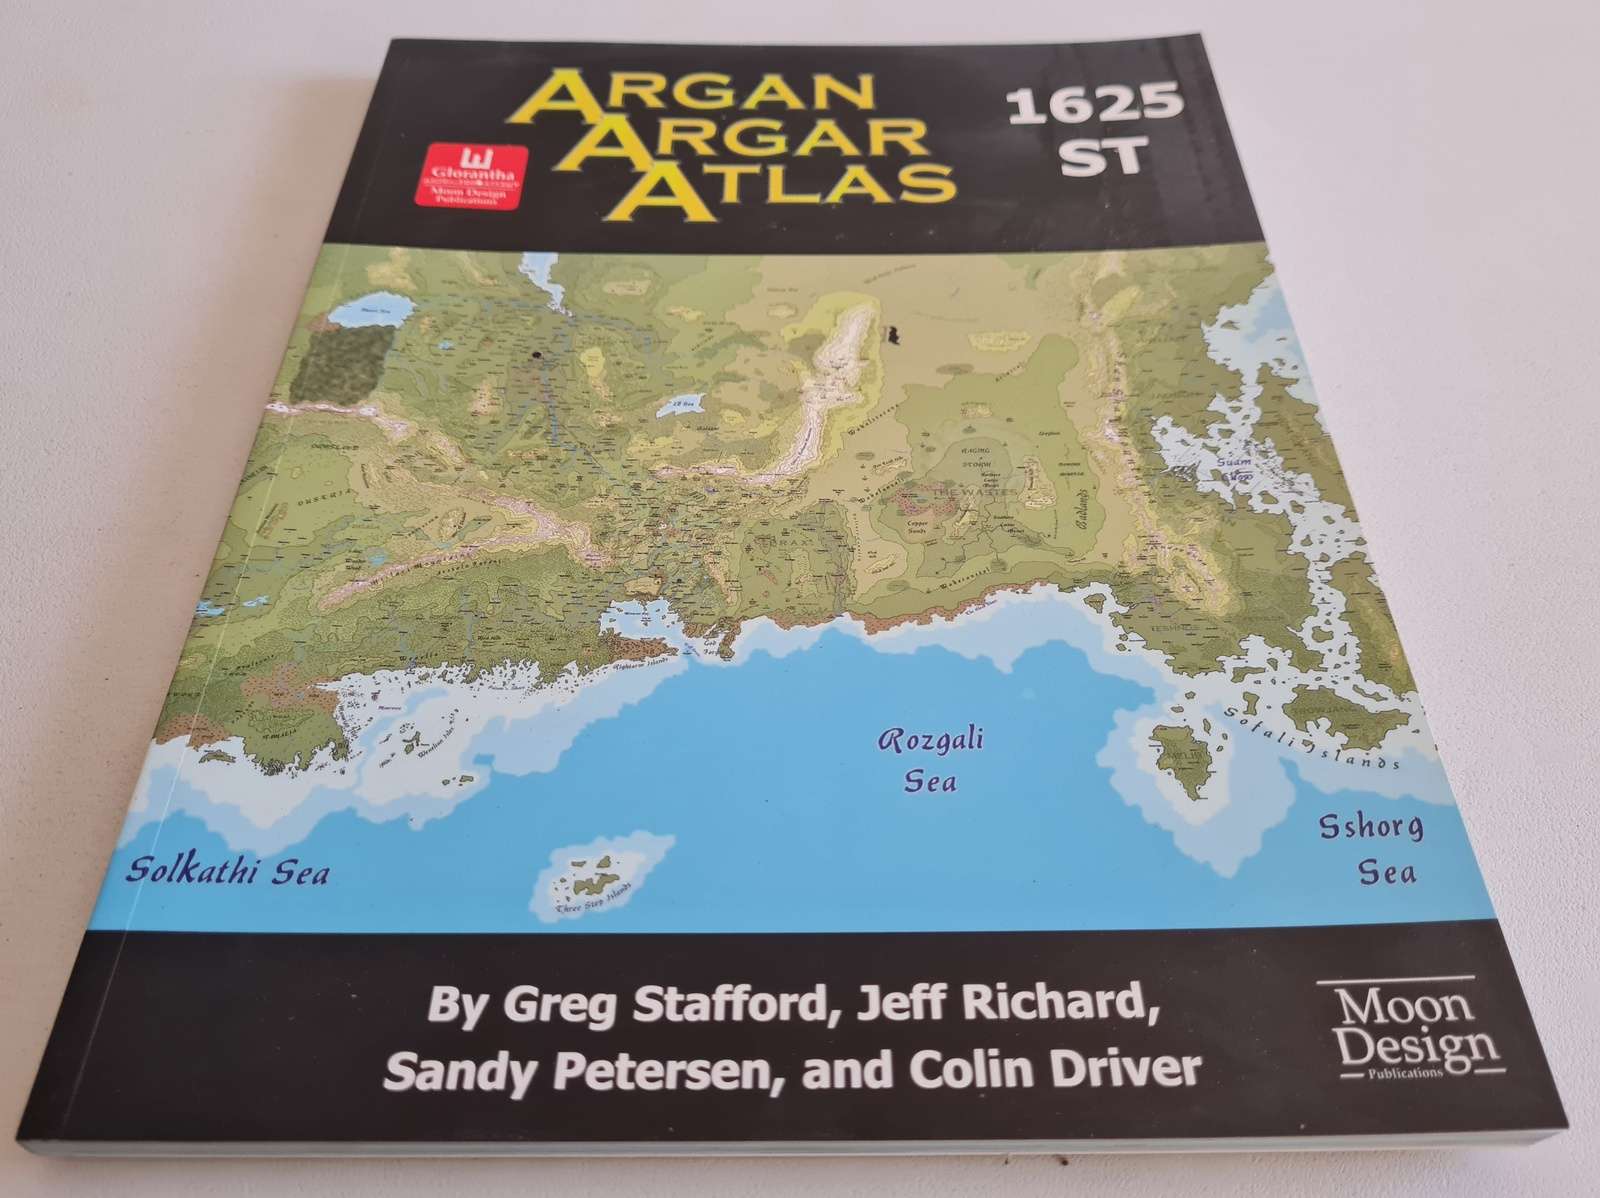 Argan Argar Atlas 1625 ST (Glorantha)